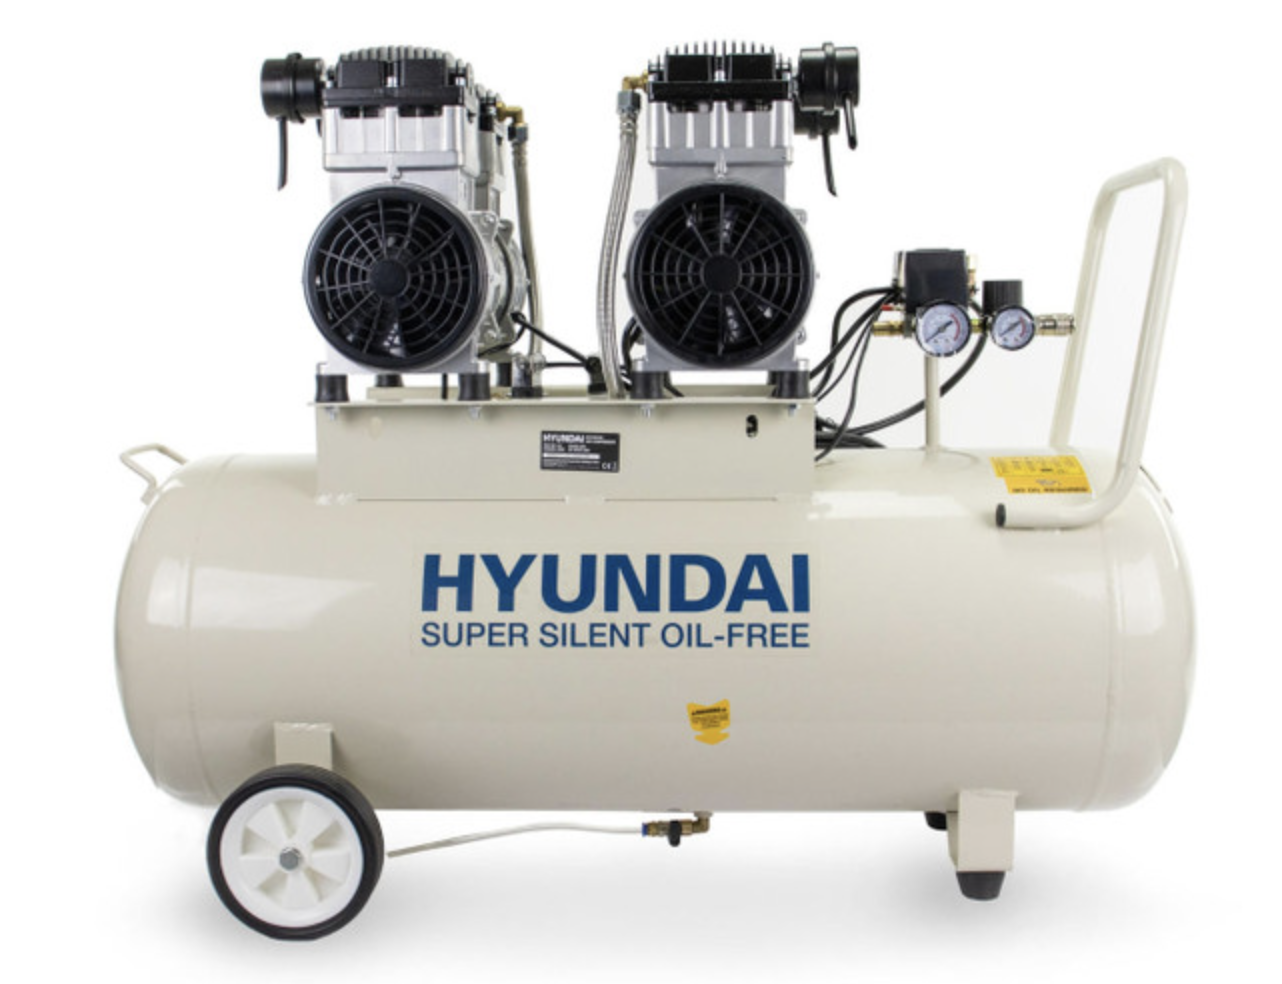 UK Suppliers Hyundai 100 Litre Silenced Air Compressor 3000W Electric Oil-free 4hp 